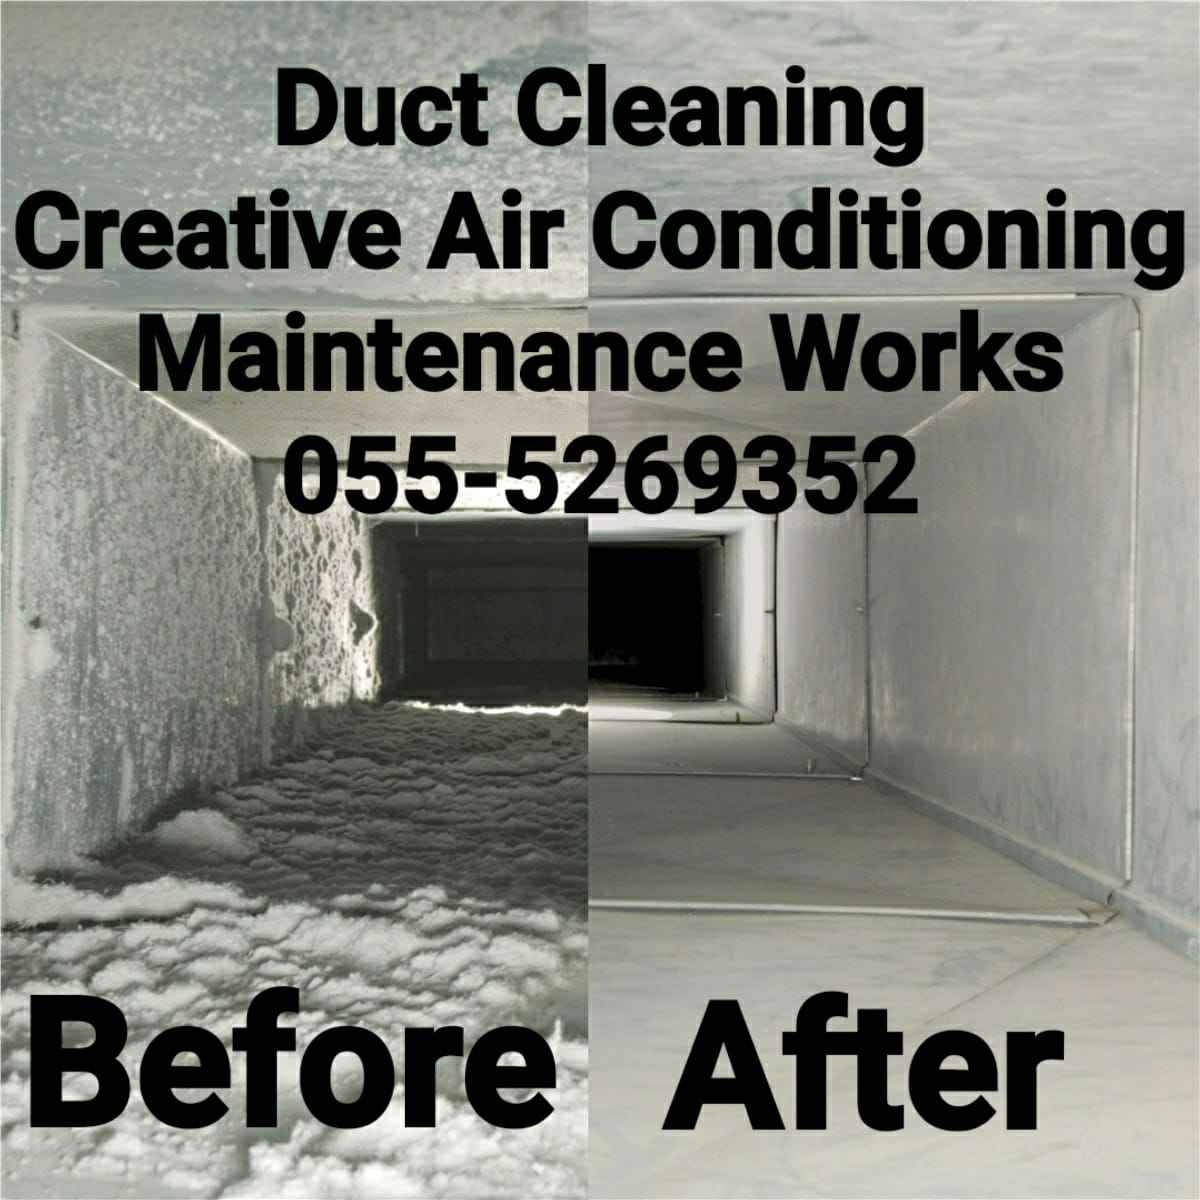 ac repair and ac duct cleaning service in ajman dubai sharjah